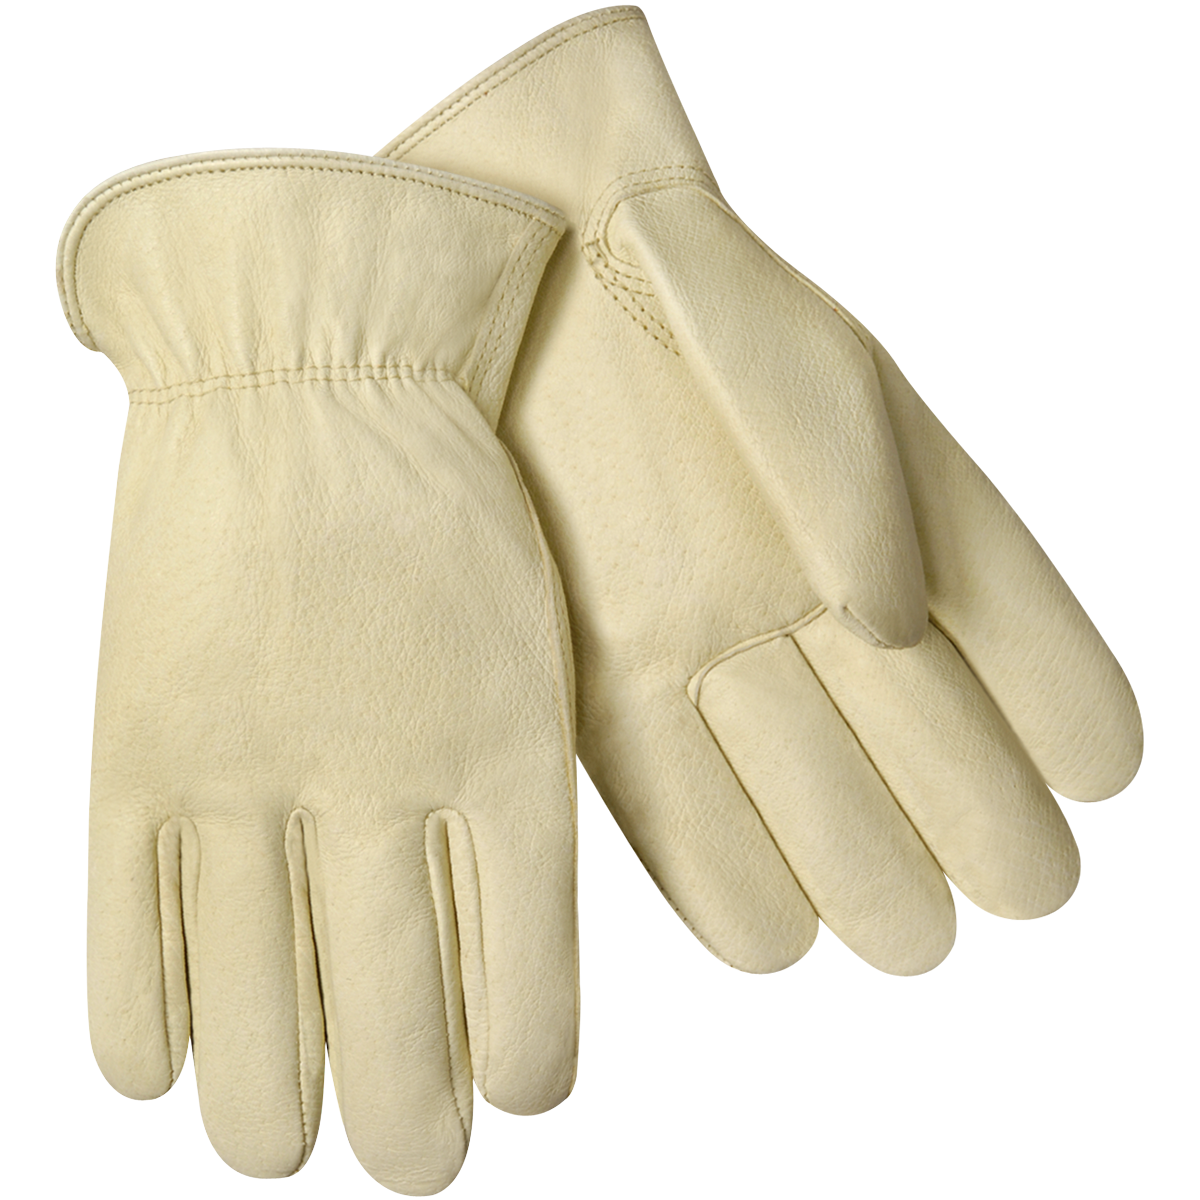 Winter Gloves Download Free Image PNG Image